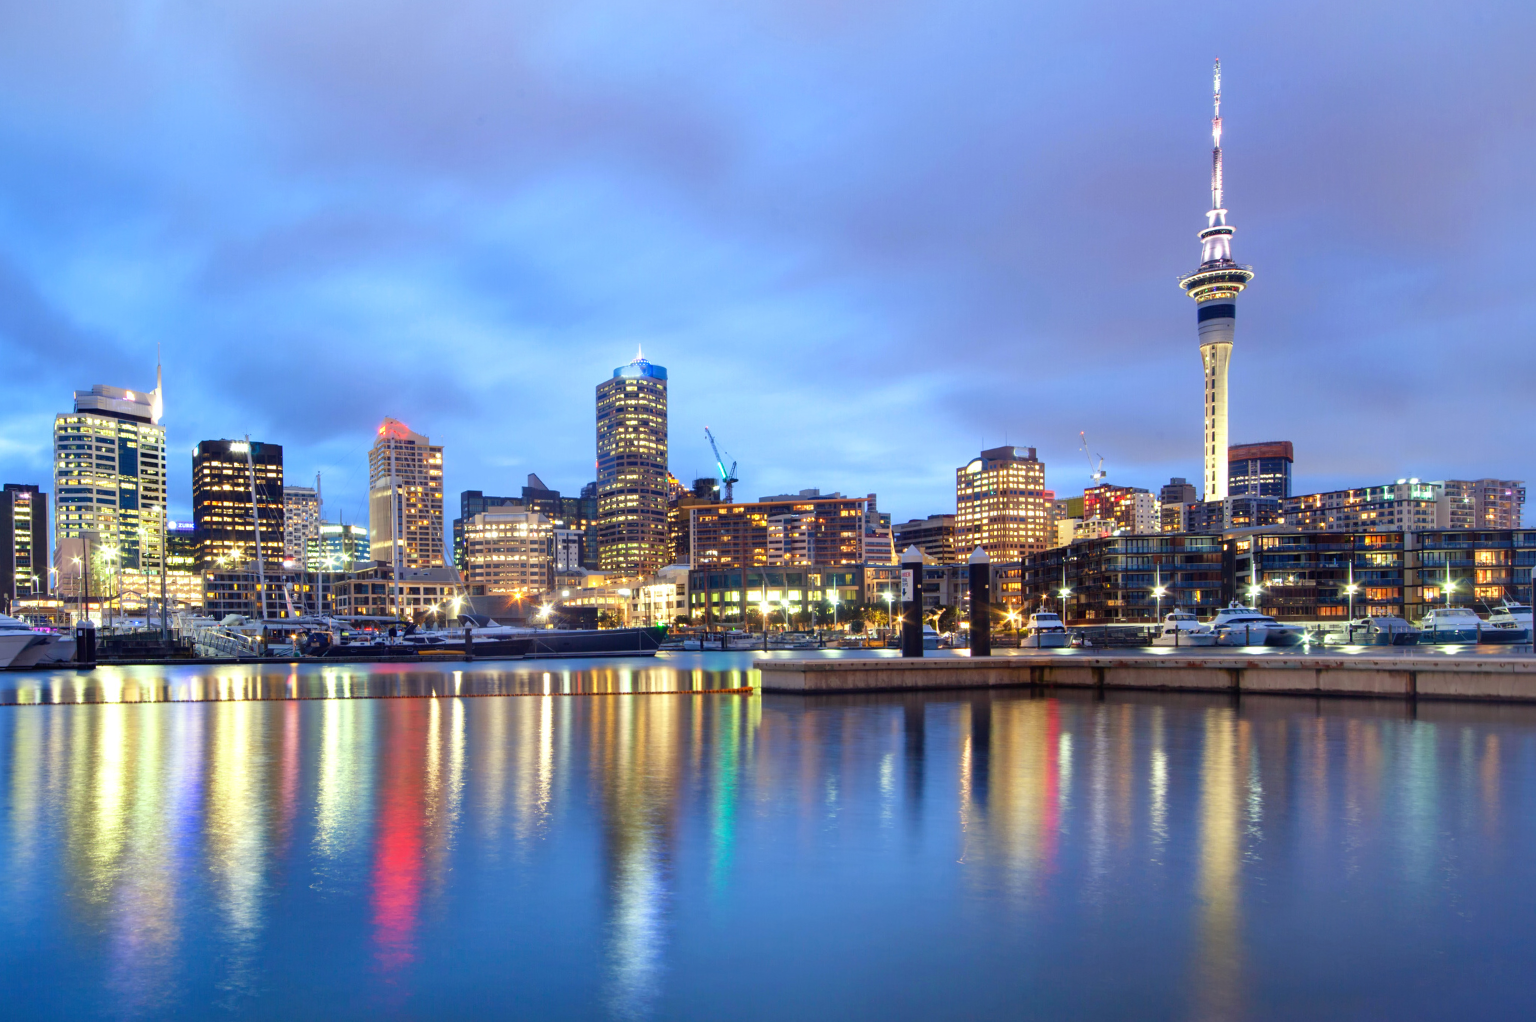 Kauwahaia Island Auckland New Zealand UHD 4K Wallpaper  Pixelz